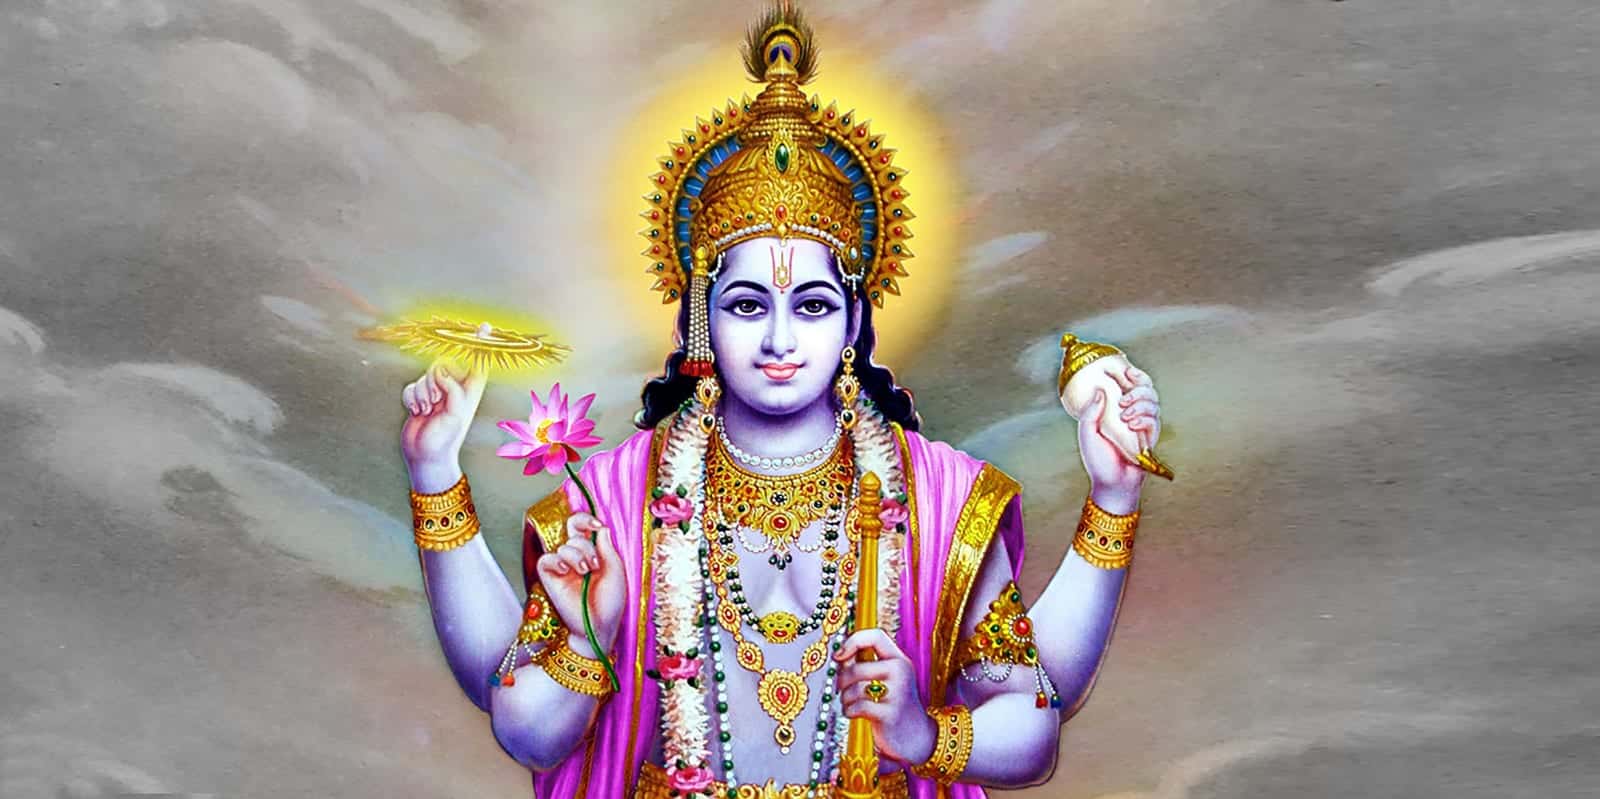 Deuses hindus - conheça as principais divindades do hinduísmo